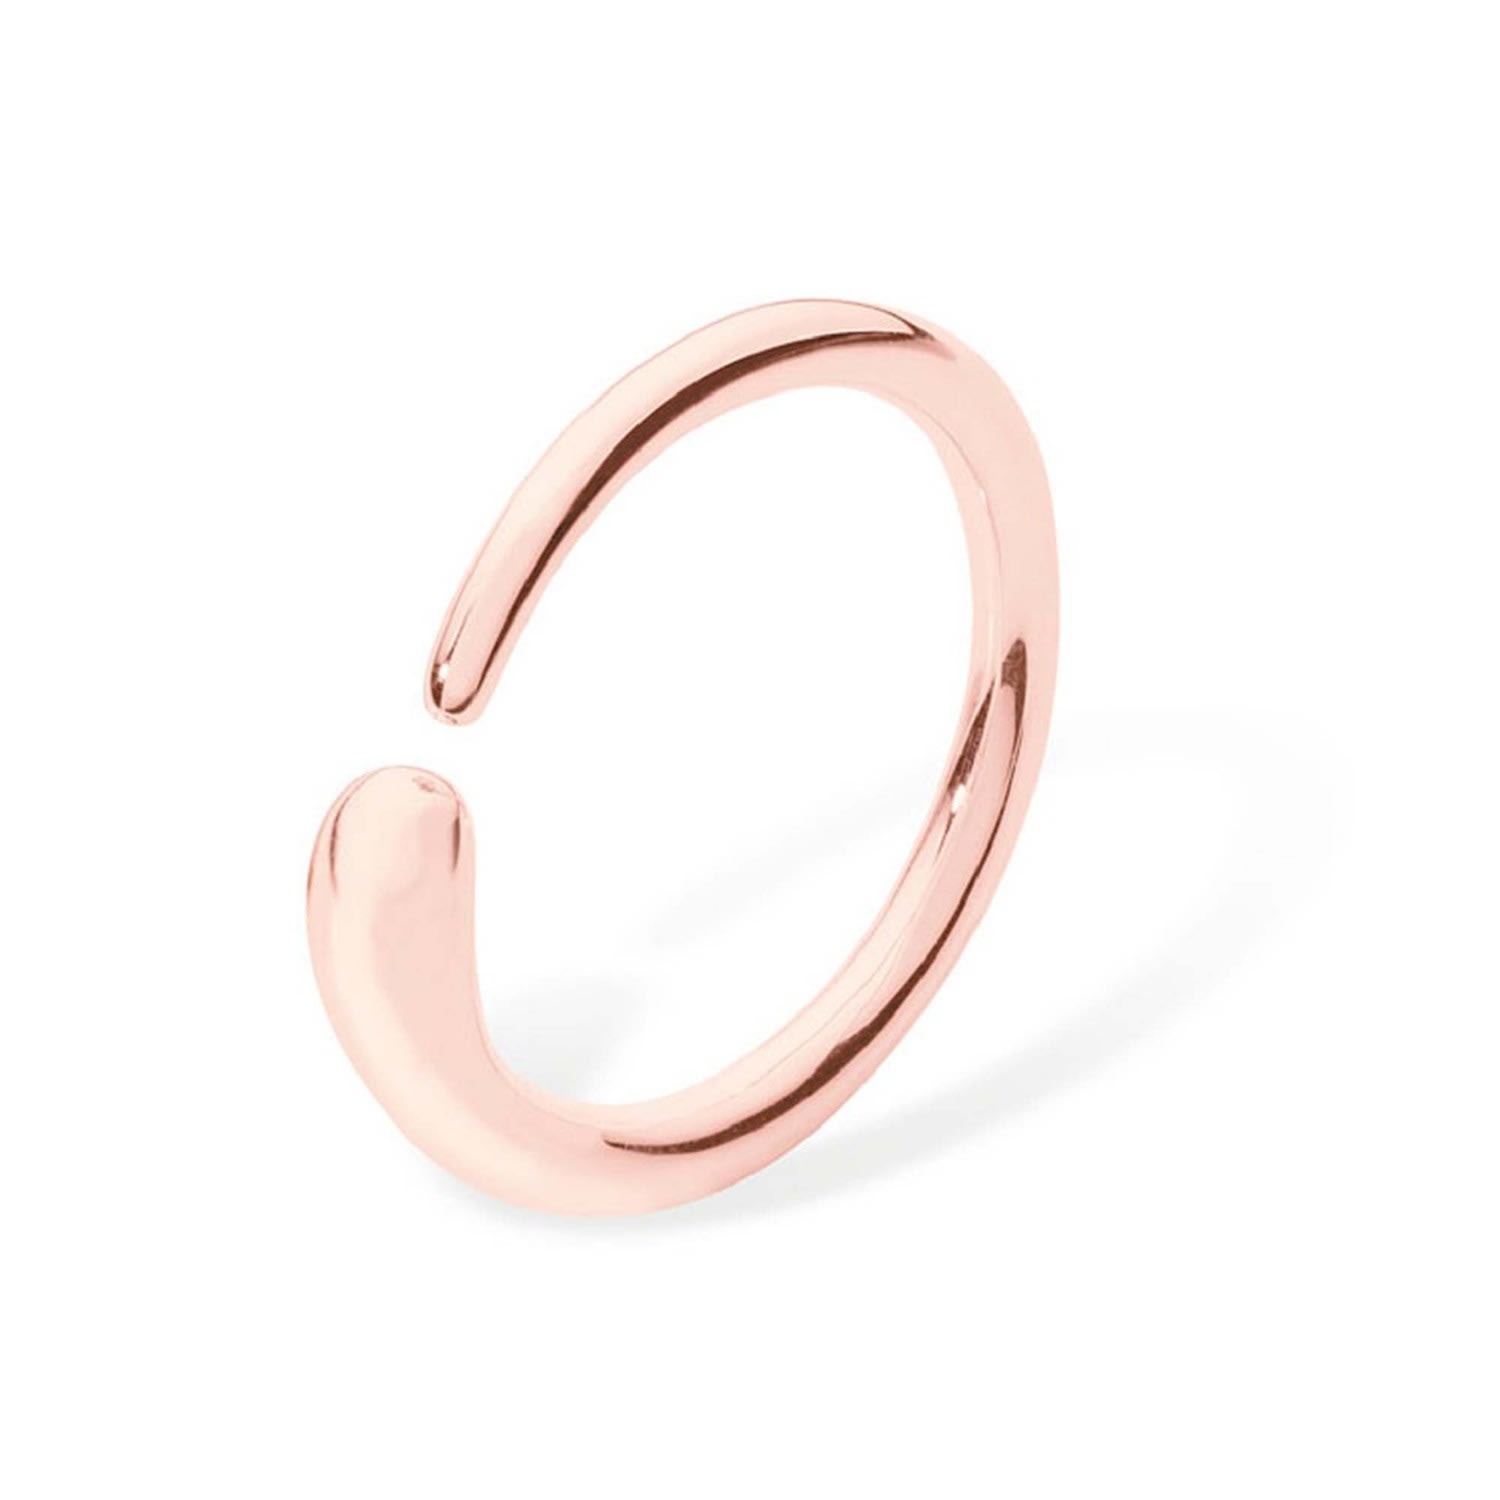 Lucy Quartermaine Women's Single Drop Ring In Rose Gold Vermeil